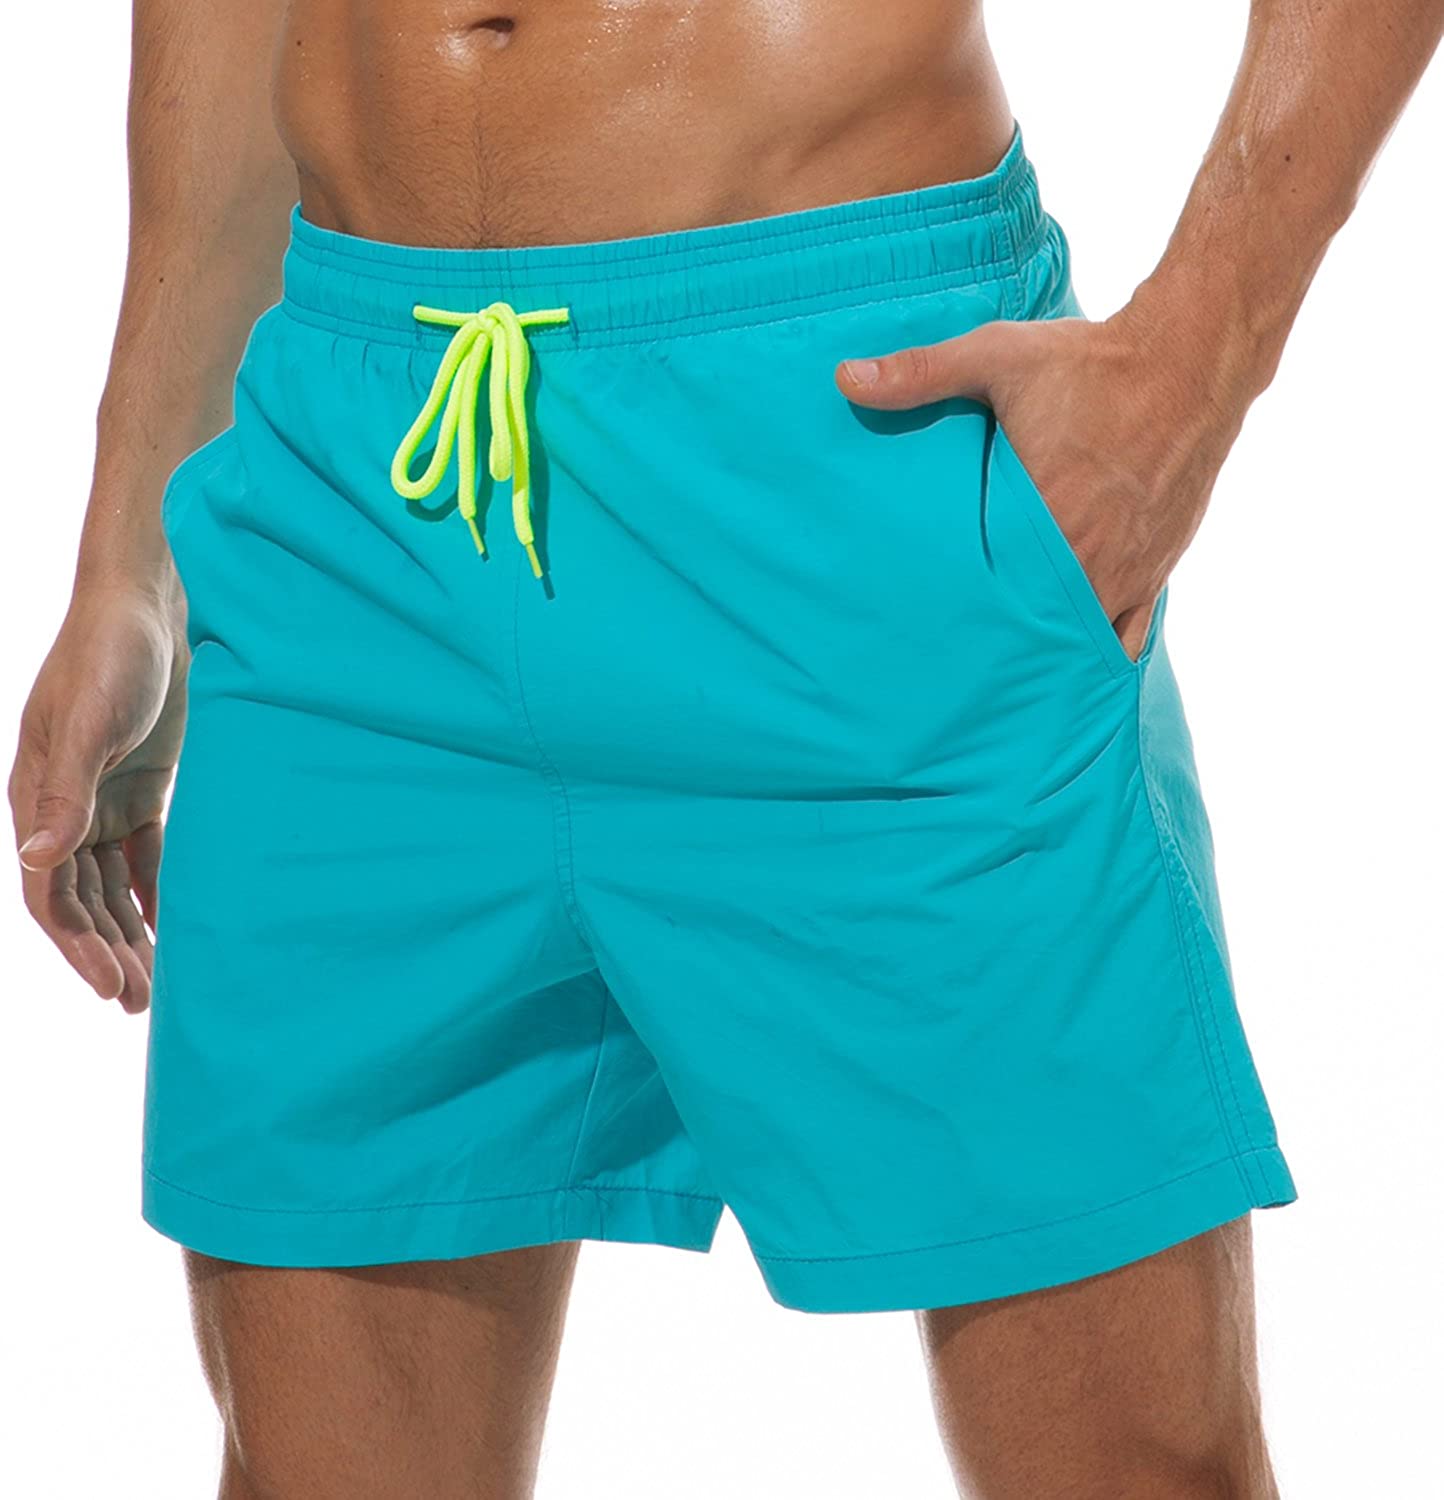 Silkworld Men S Swim Trunks Quick Dry Beach Shorts With Pockets Ebay